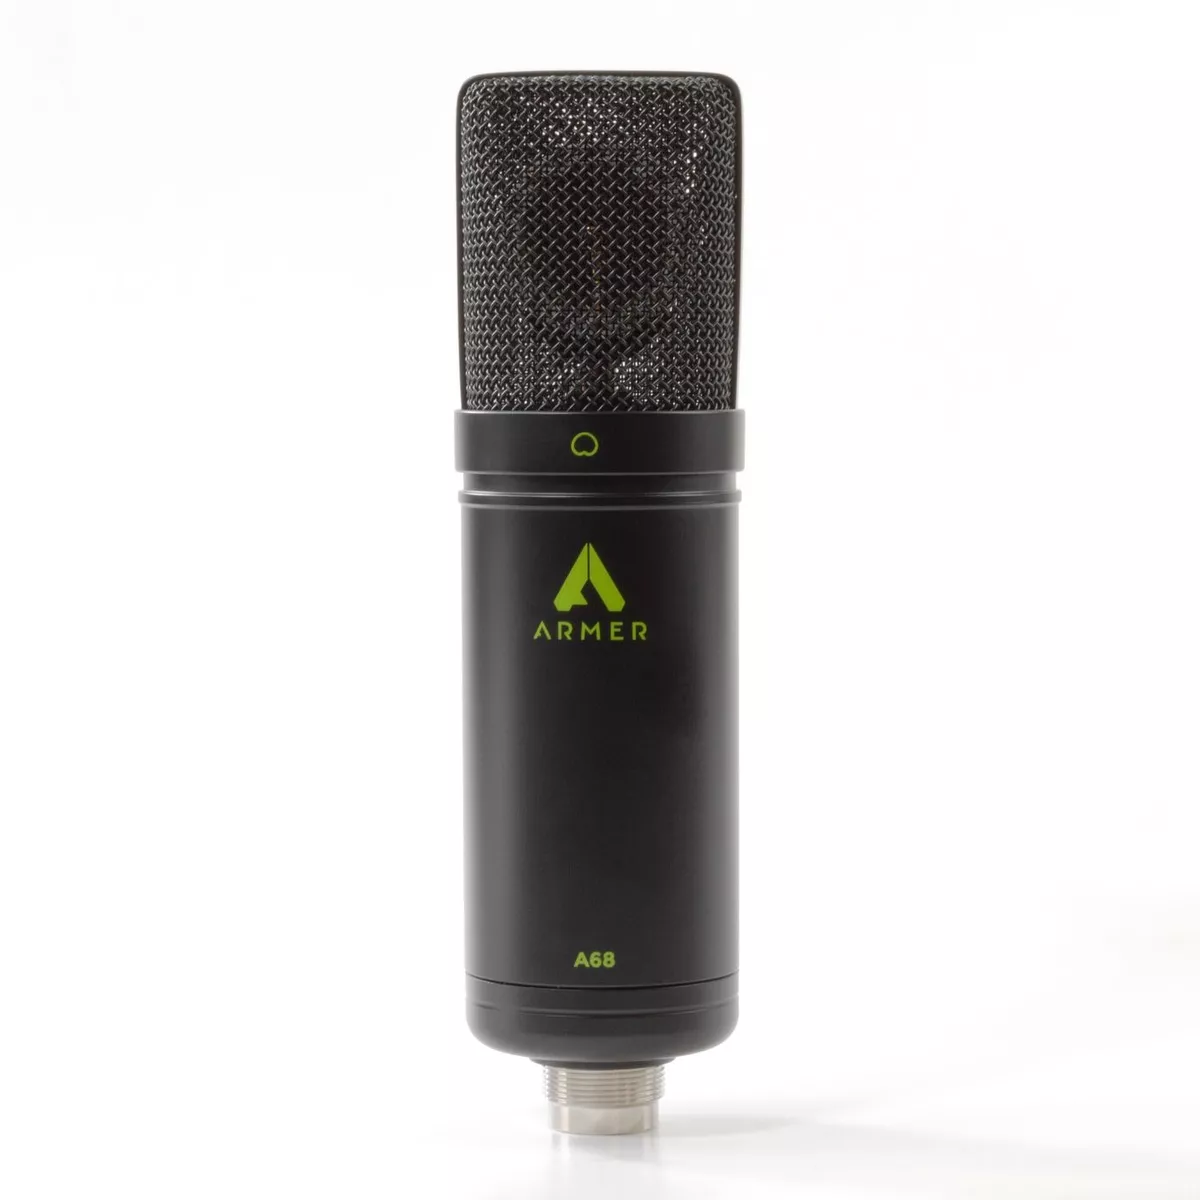 Microfone Armer A68 - em 3x Sem Juros